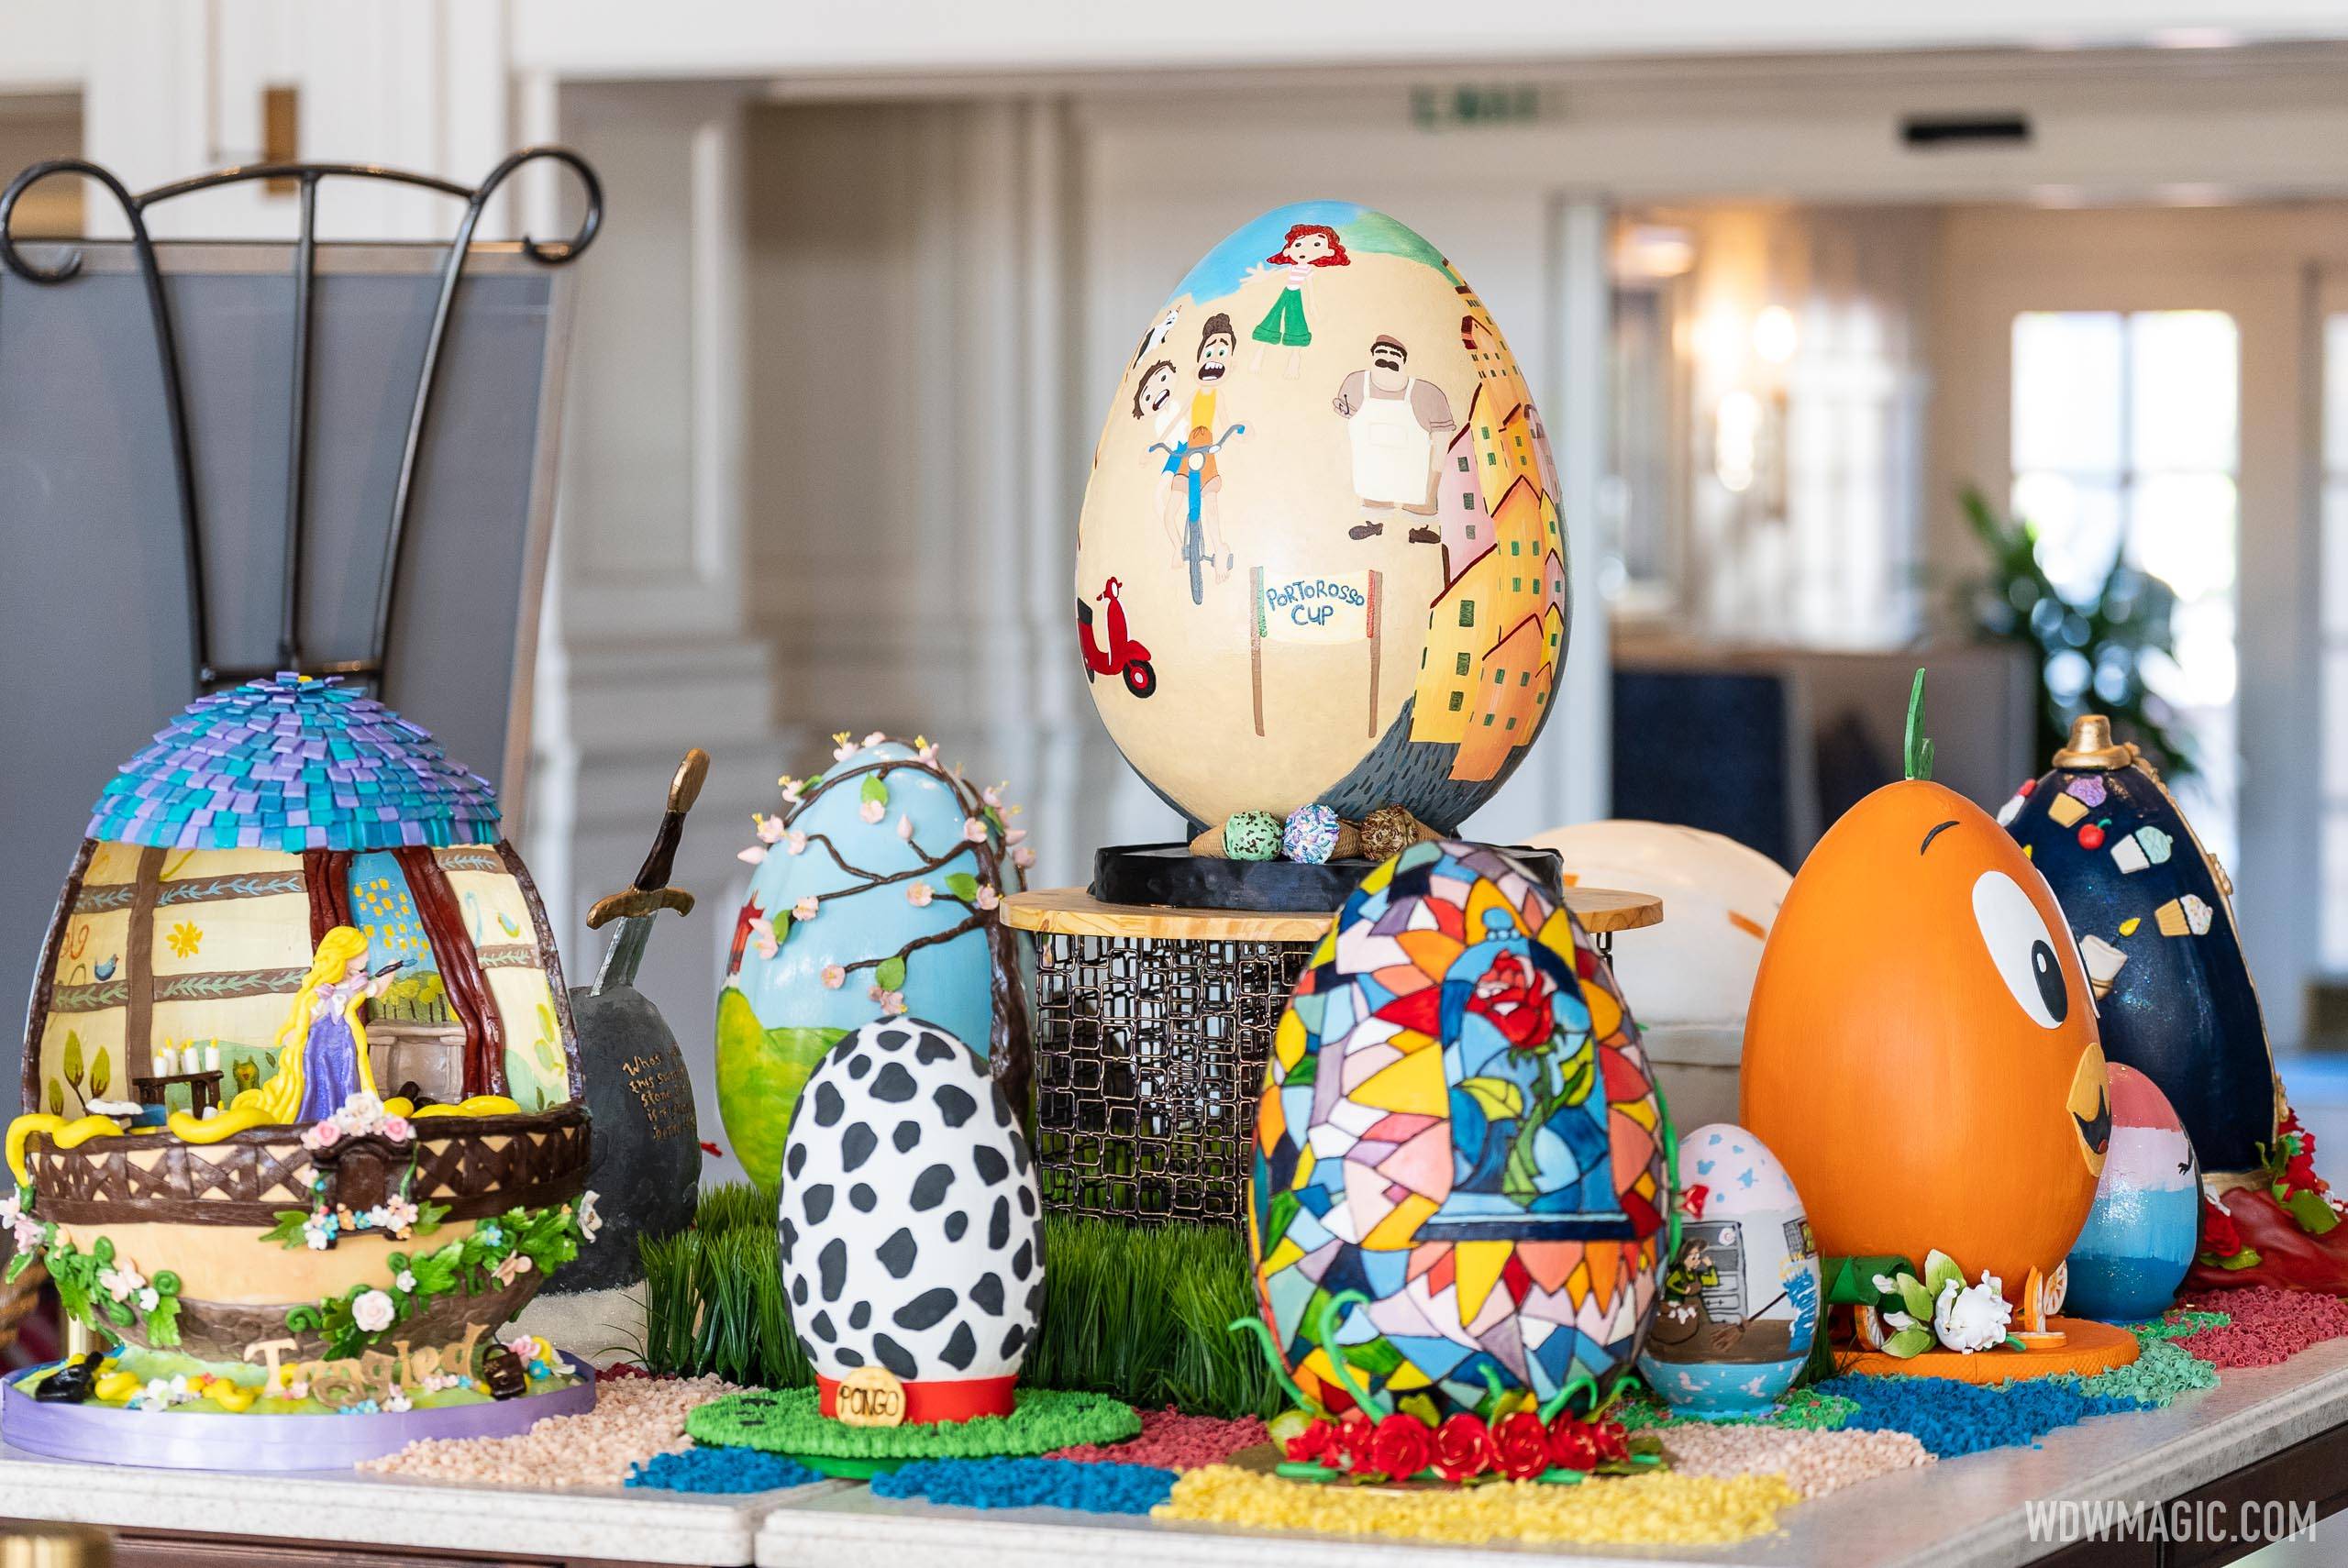 Disney's Yacht Club Resort Easter egg display 2022